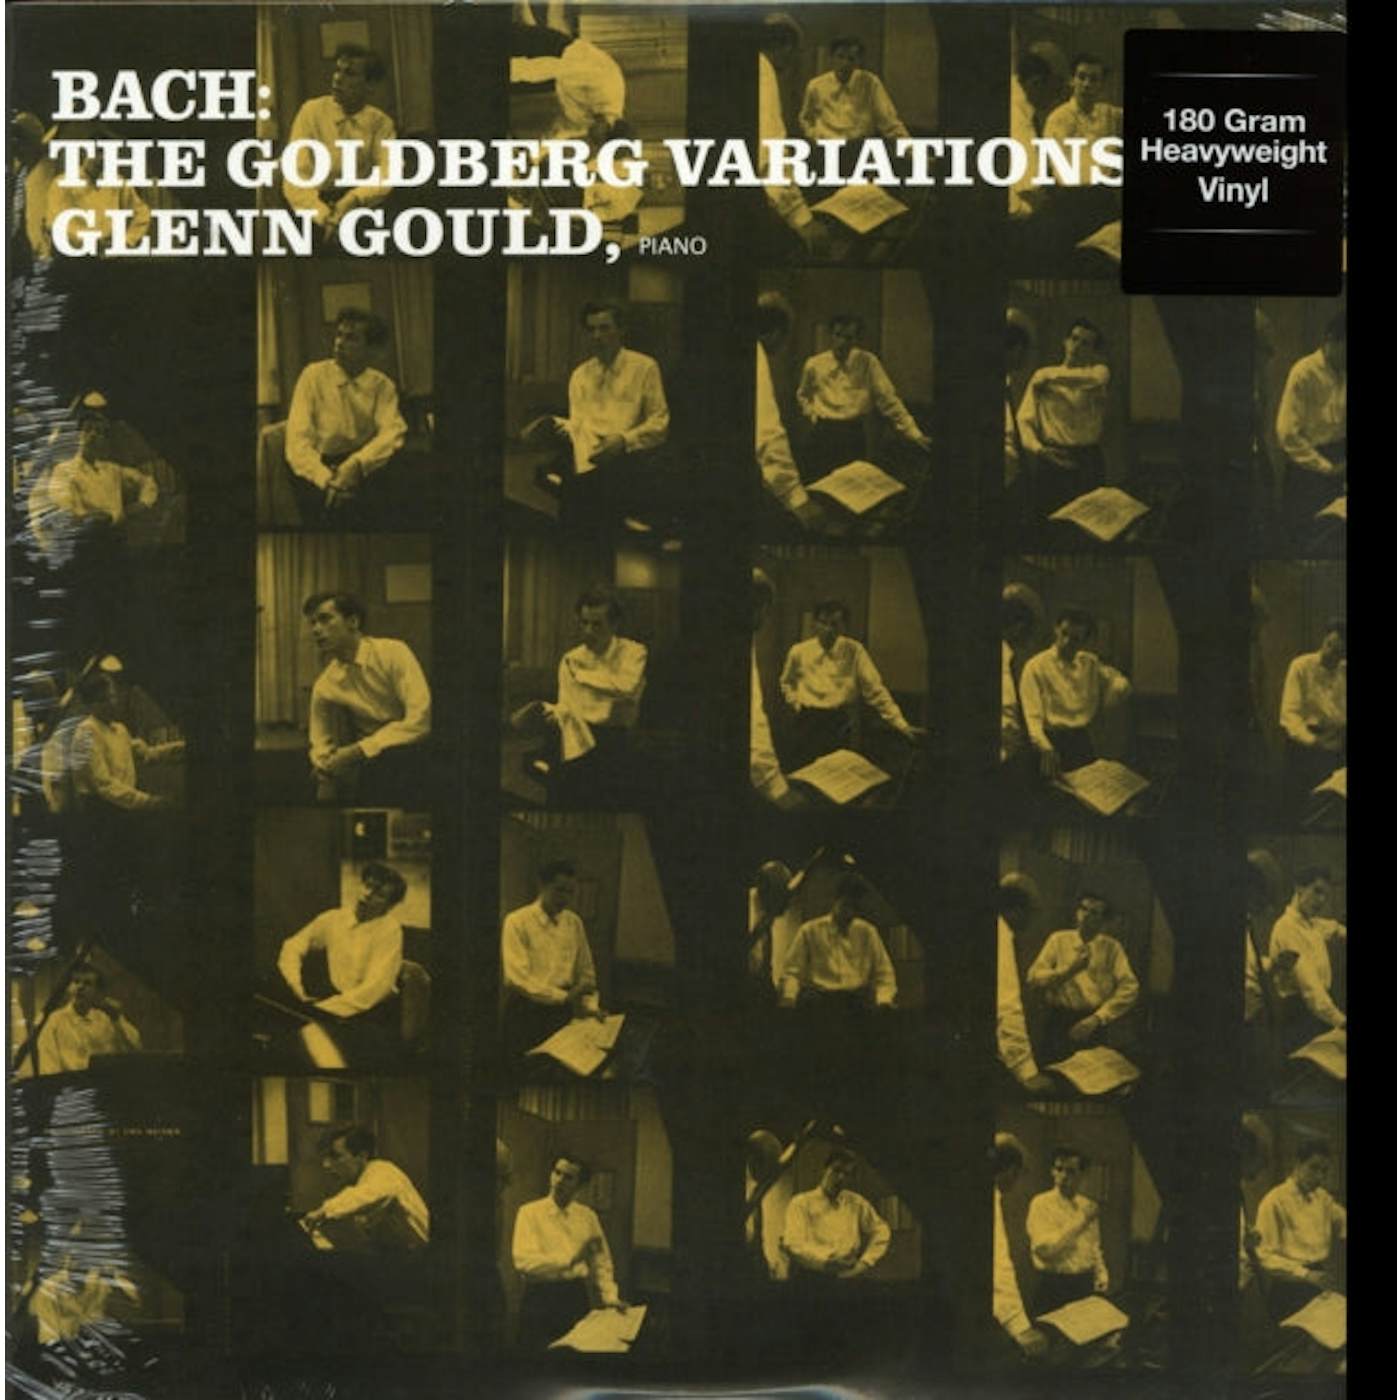 Glenn Gould LP Vinyl Record - Bach: The Goldberg Variations